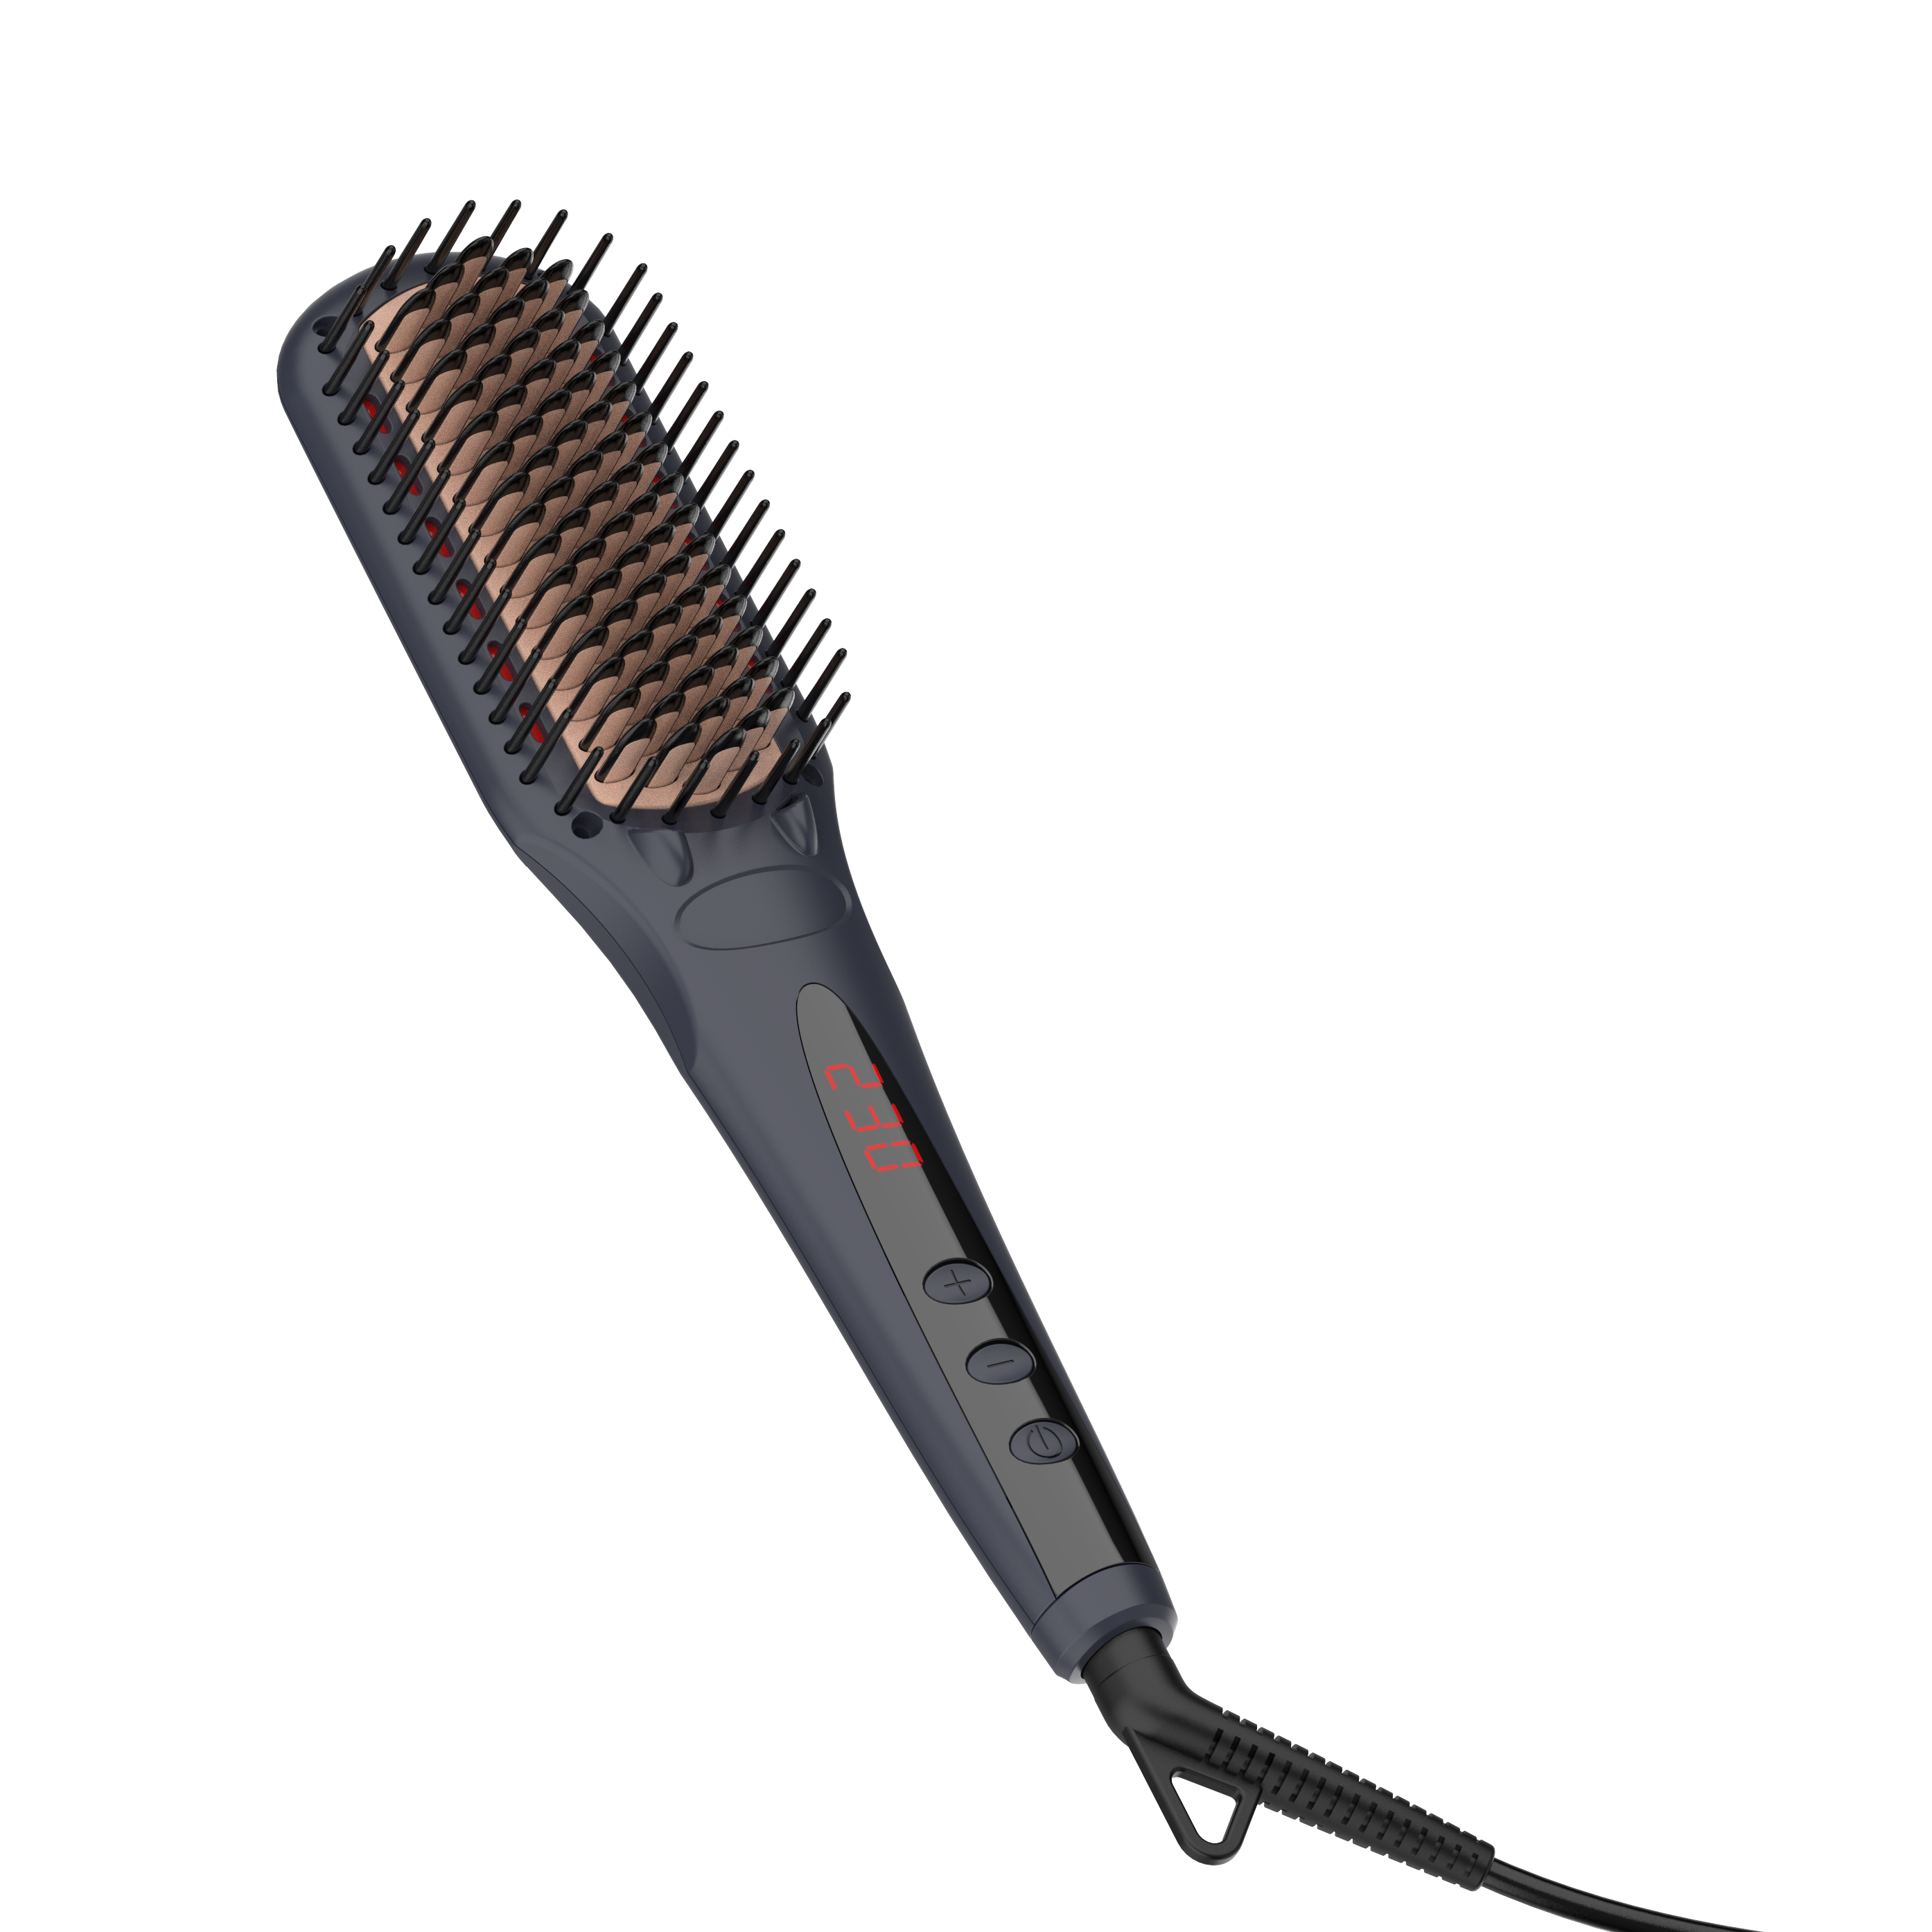 Arrendedor de cepillo para cabello infrarrojo automático, cepillo para el cabello caliente iónico eléctrico portátil, profesional 2 en 1 alisador de cabello